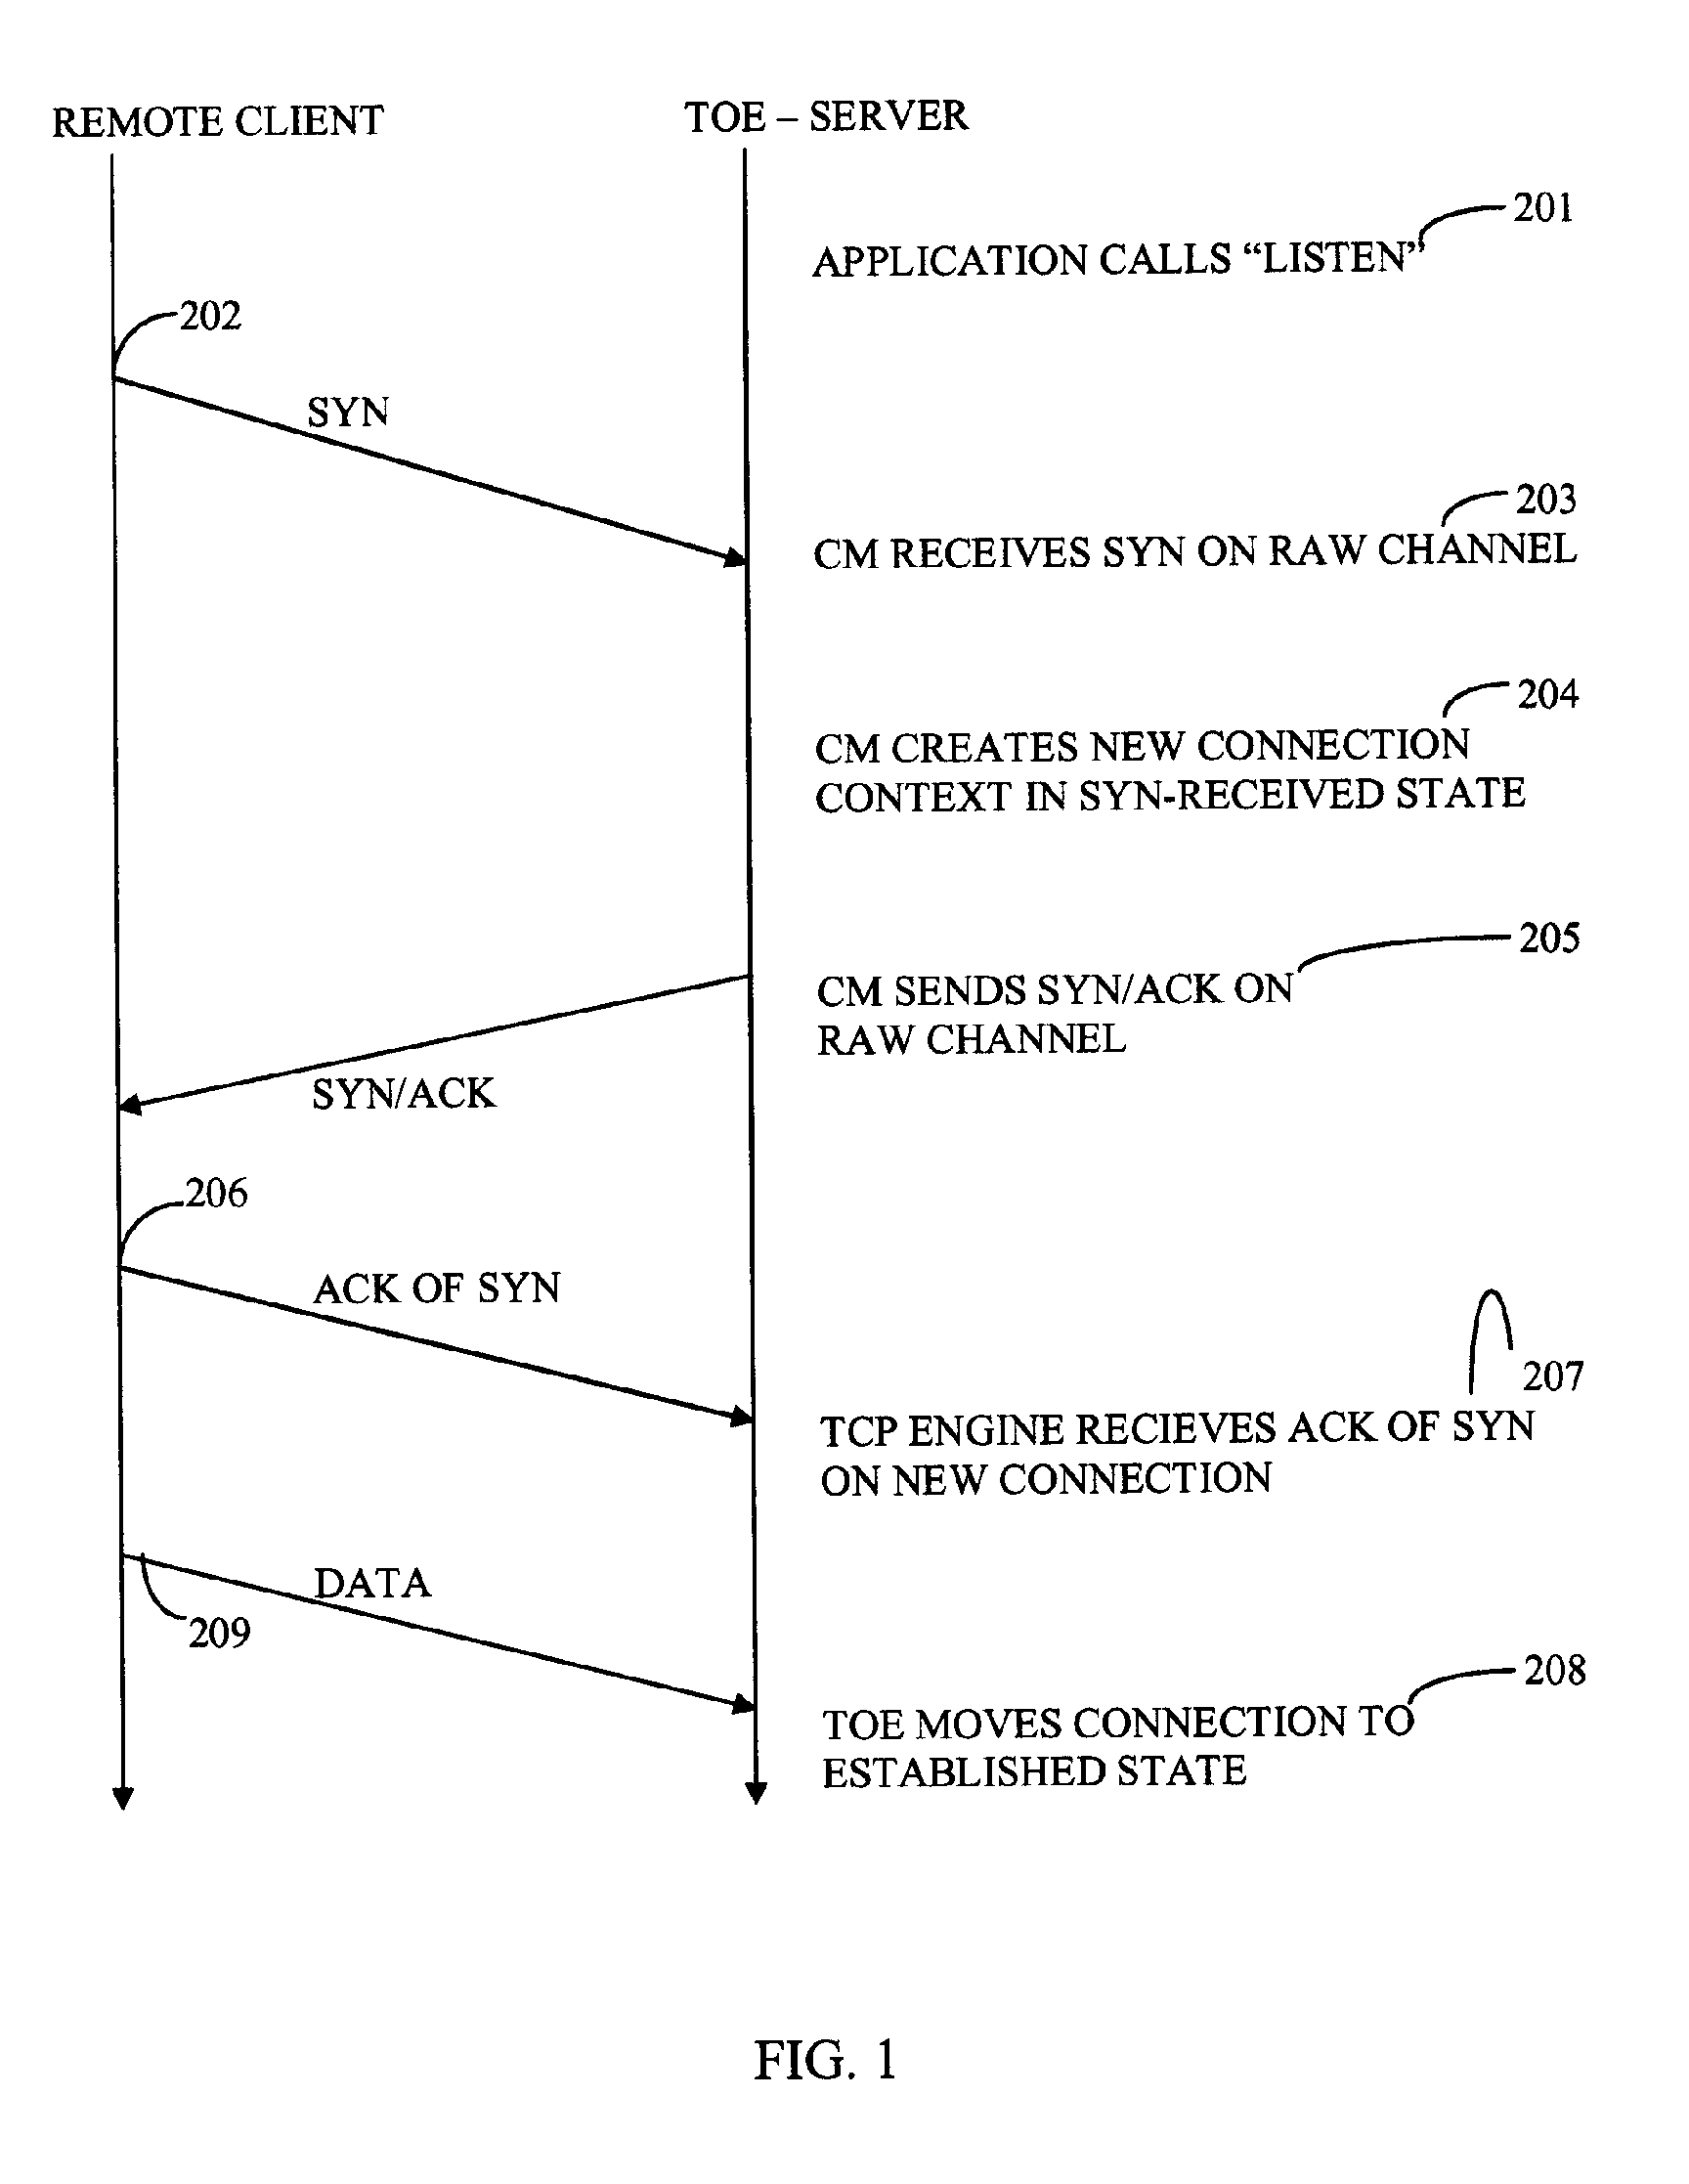 Connection establishment on a TCP offload engine